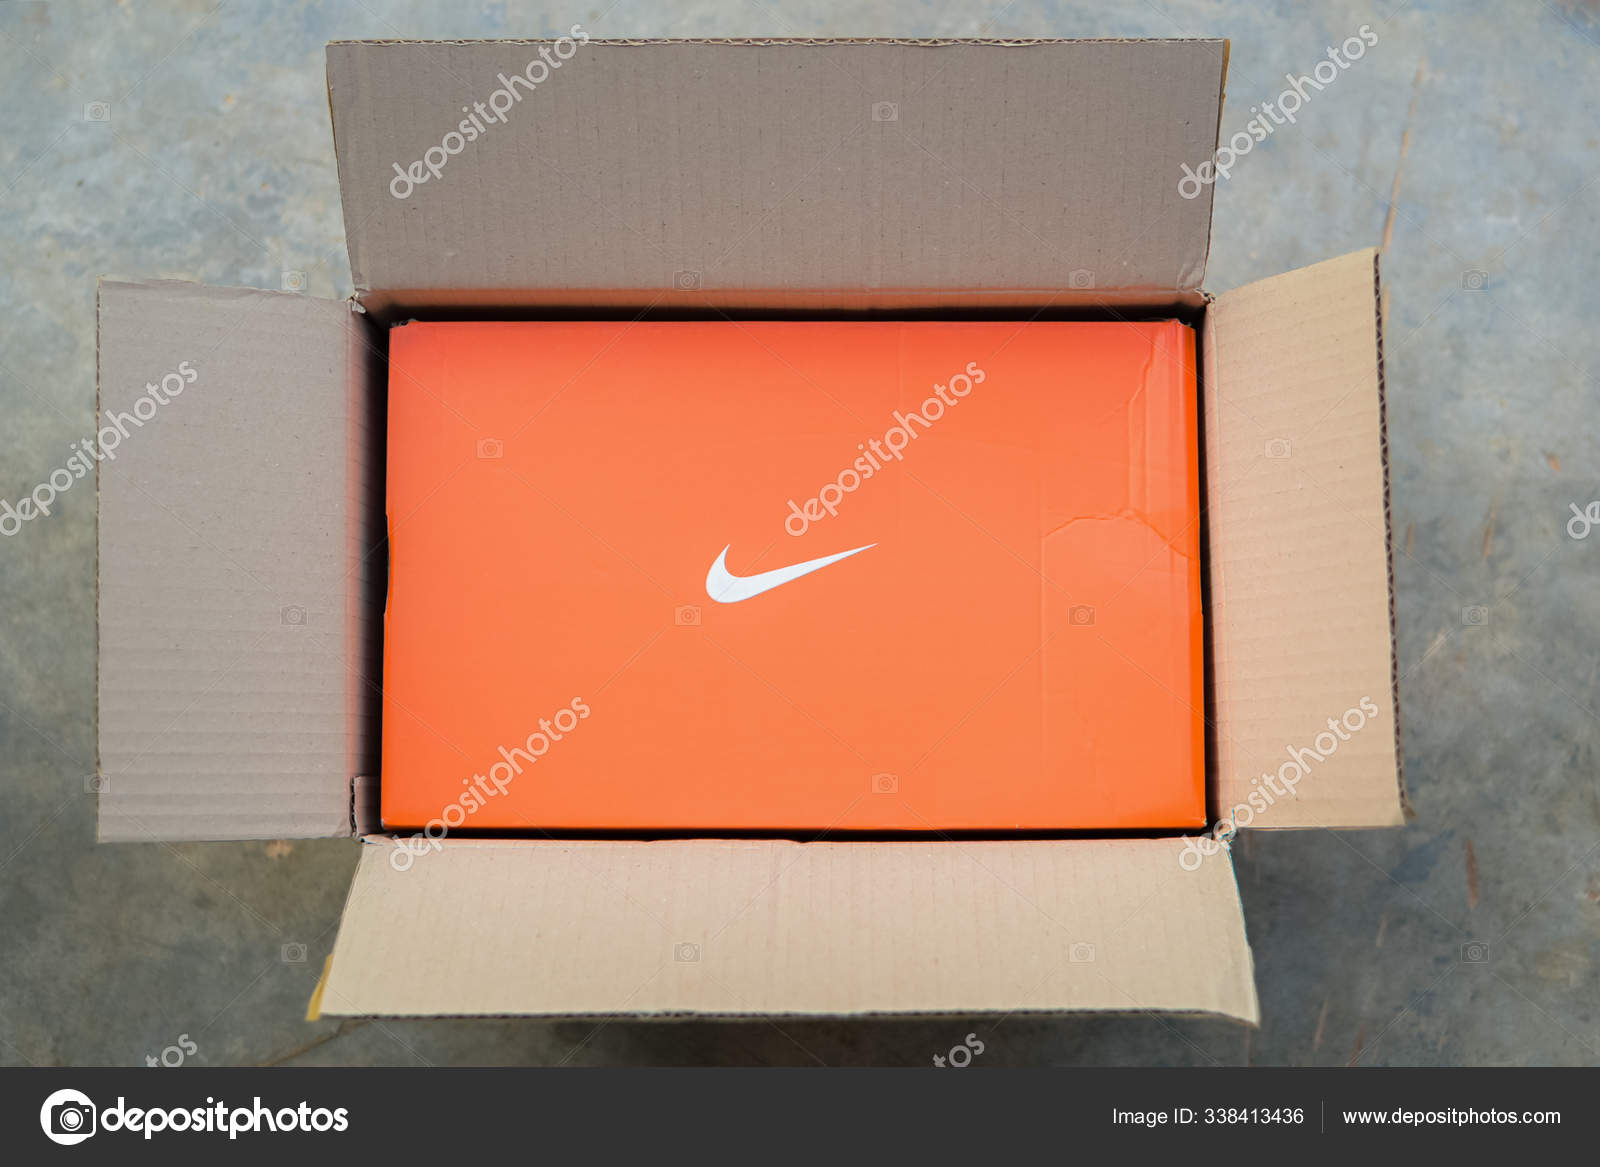 nike shoes box buy online